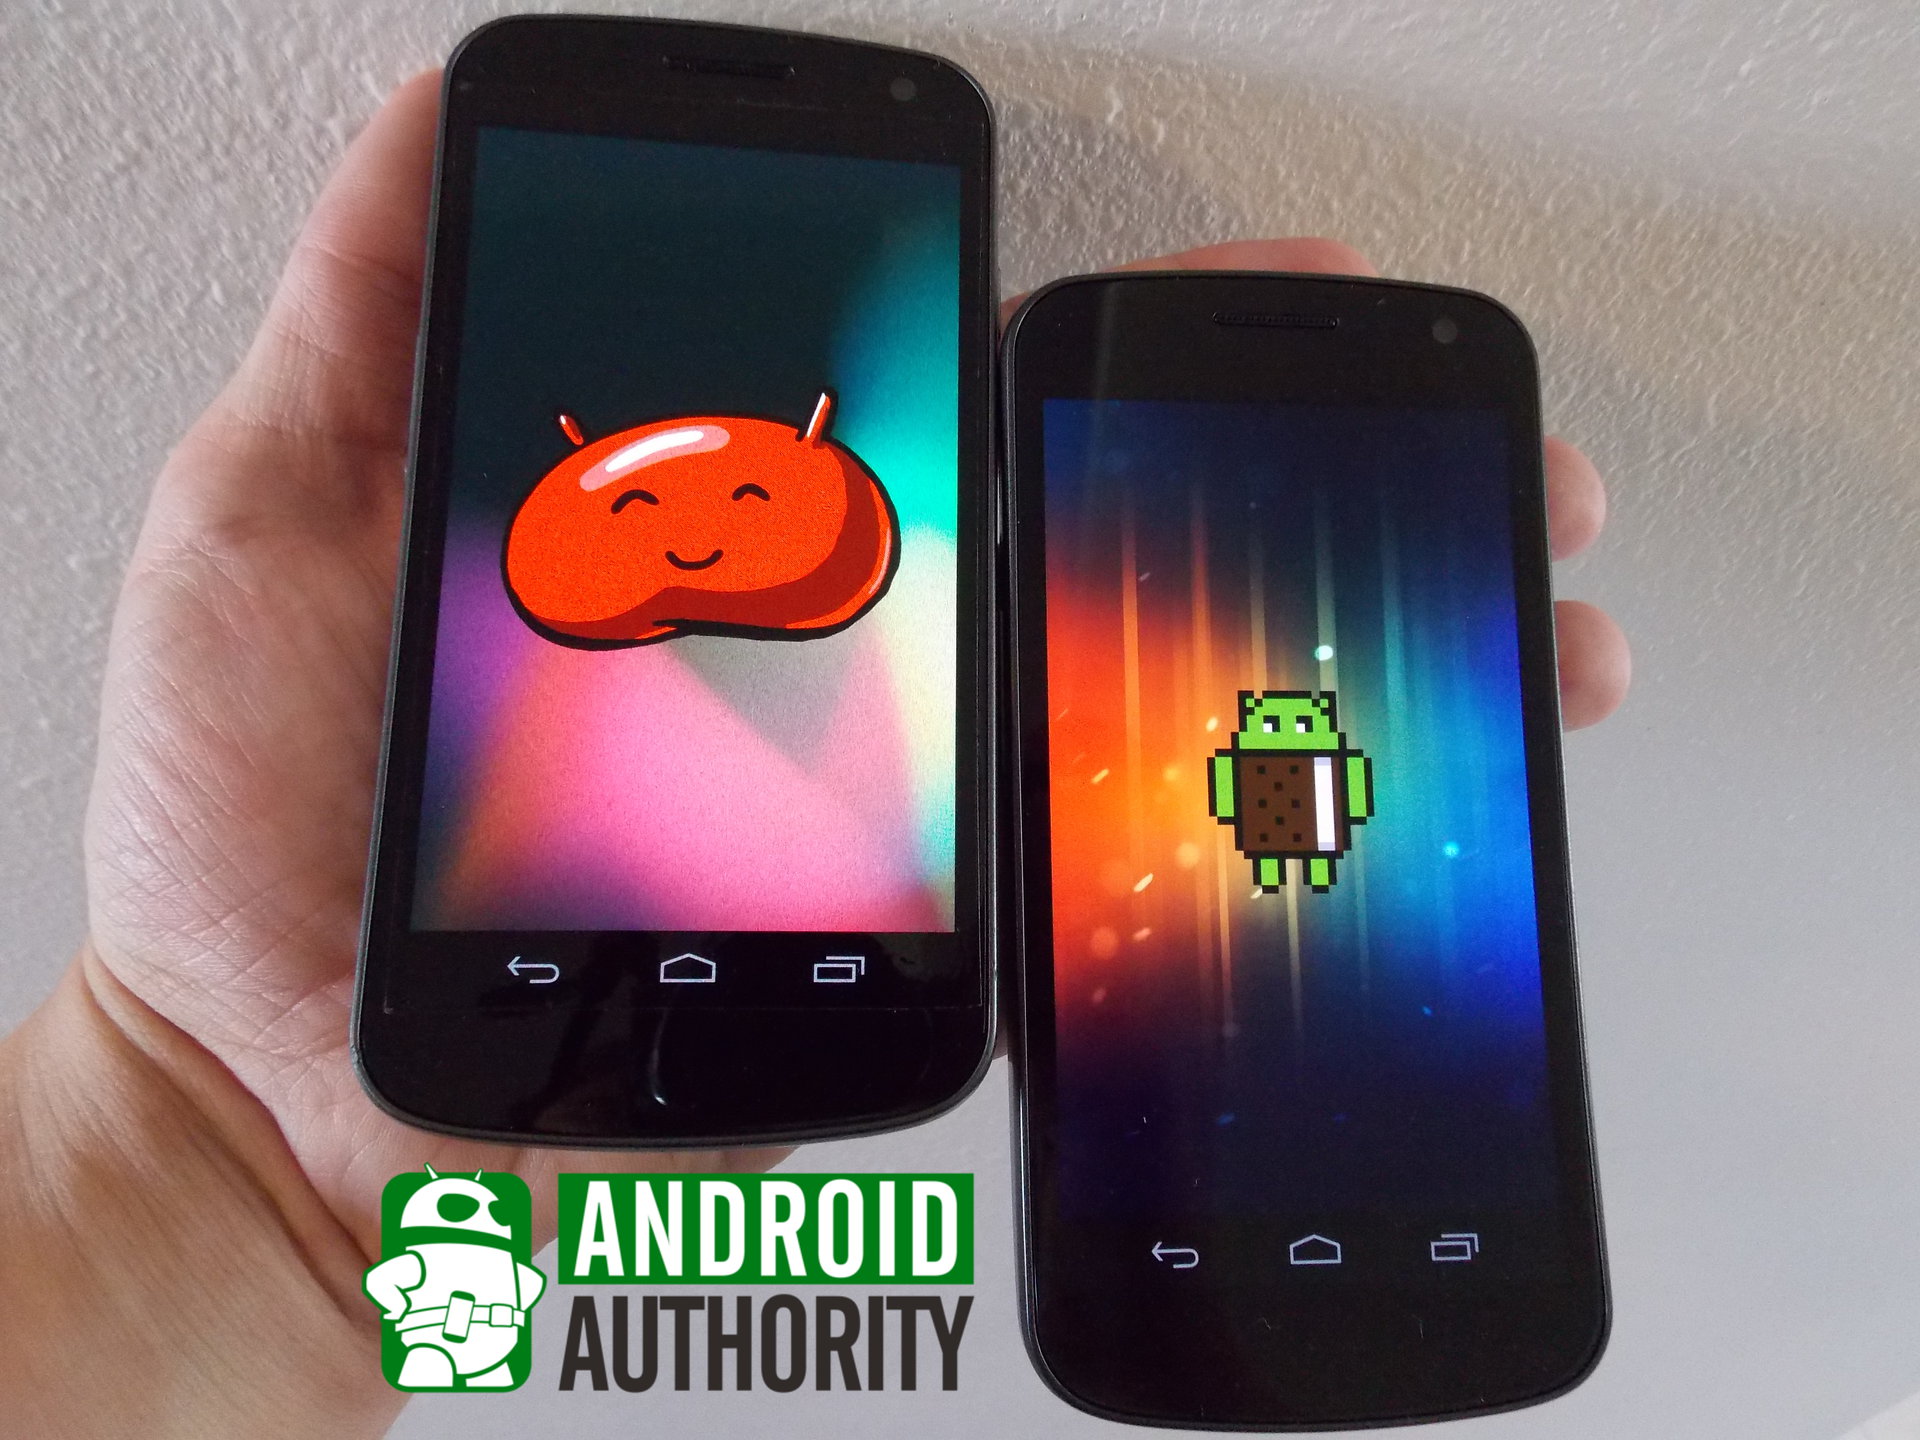 Ти айс андроид. Android 4.2 Jelly Bean. Galaxy Nexus Android 4.0 ICS vs Android 4.1 Jelly Bean. Телефон с Android 4.0 Ice Cream. Андроид 4 0 Ice Cream sengry.